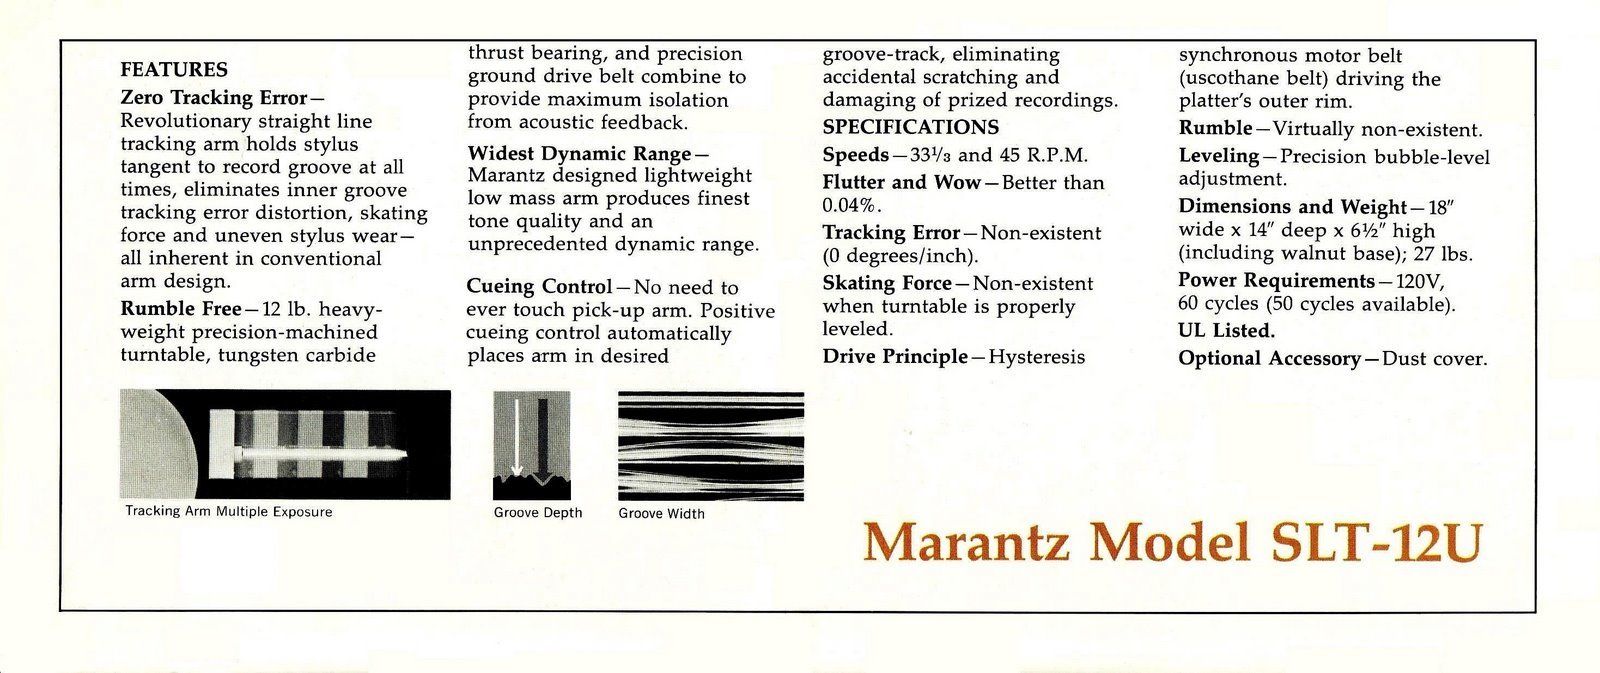 Marantz SLT-12 U-Prospekt-3.jpg